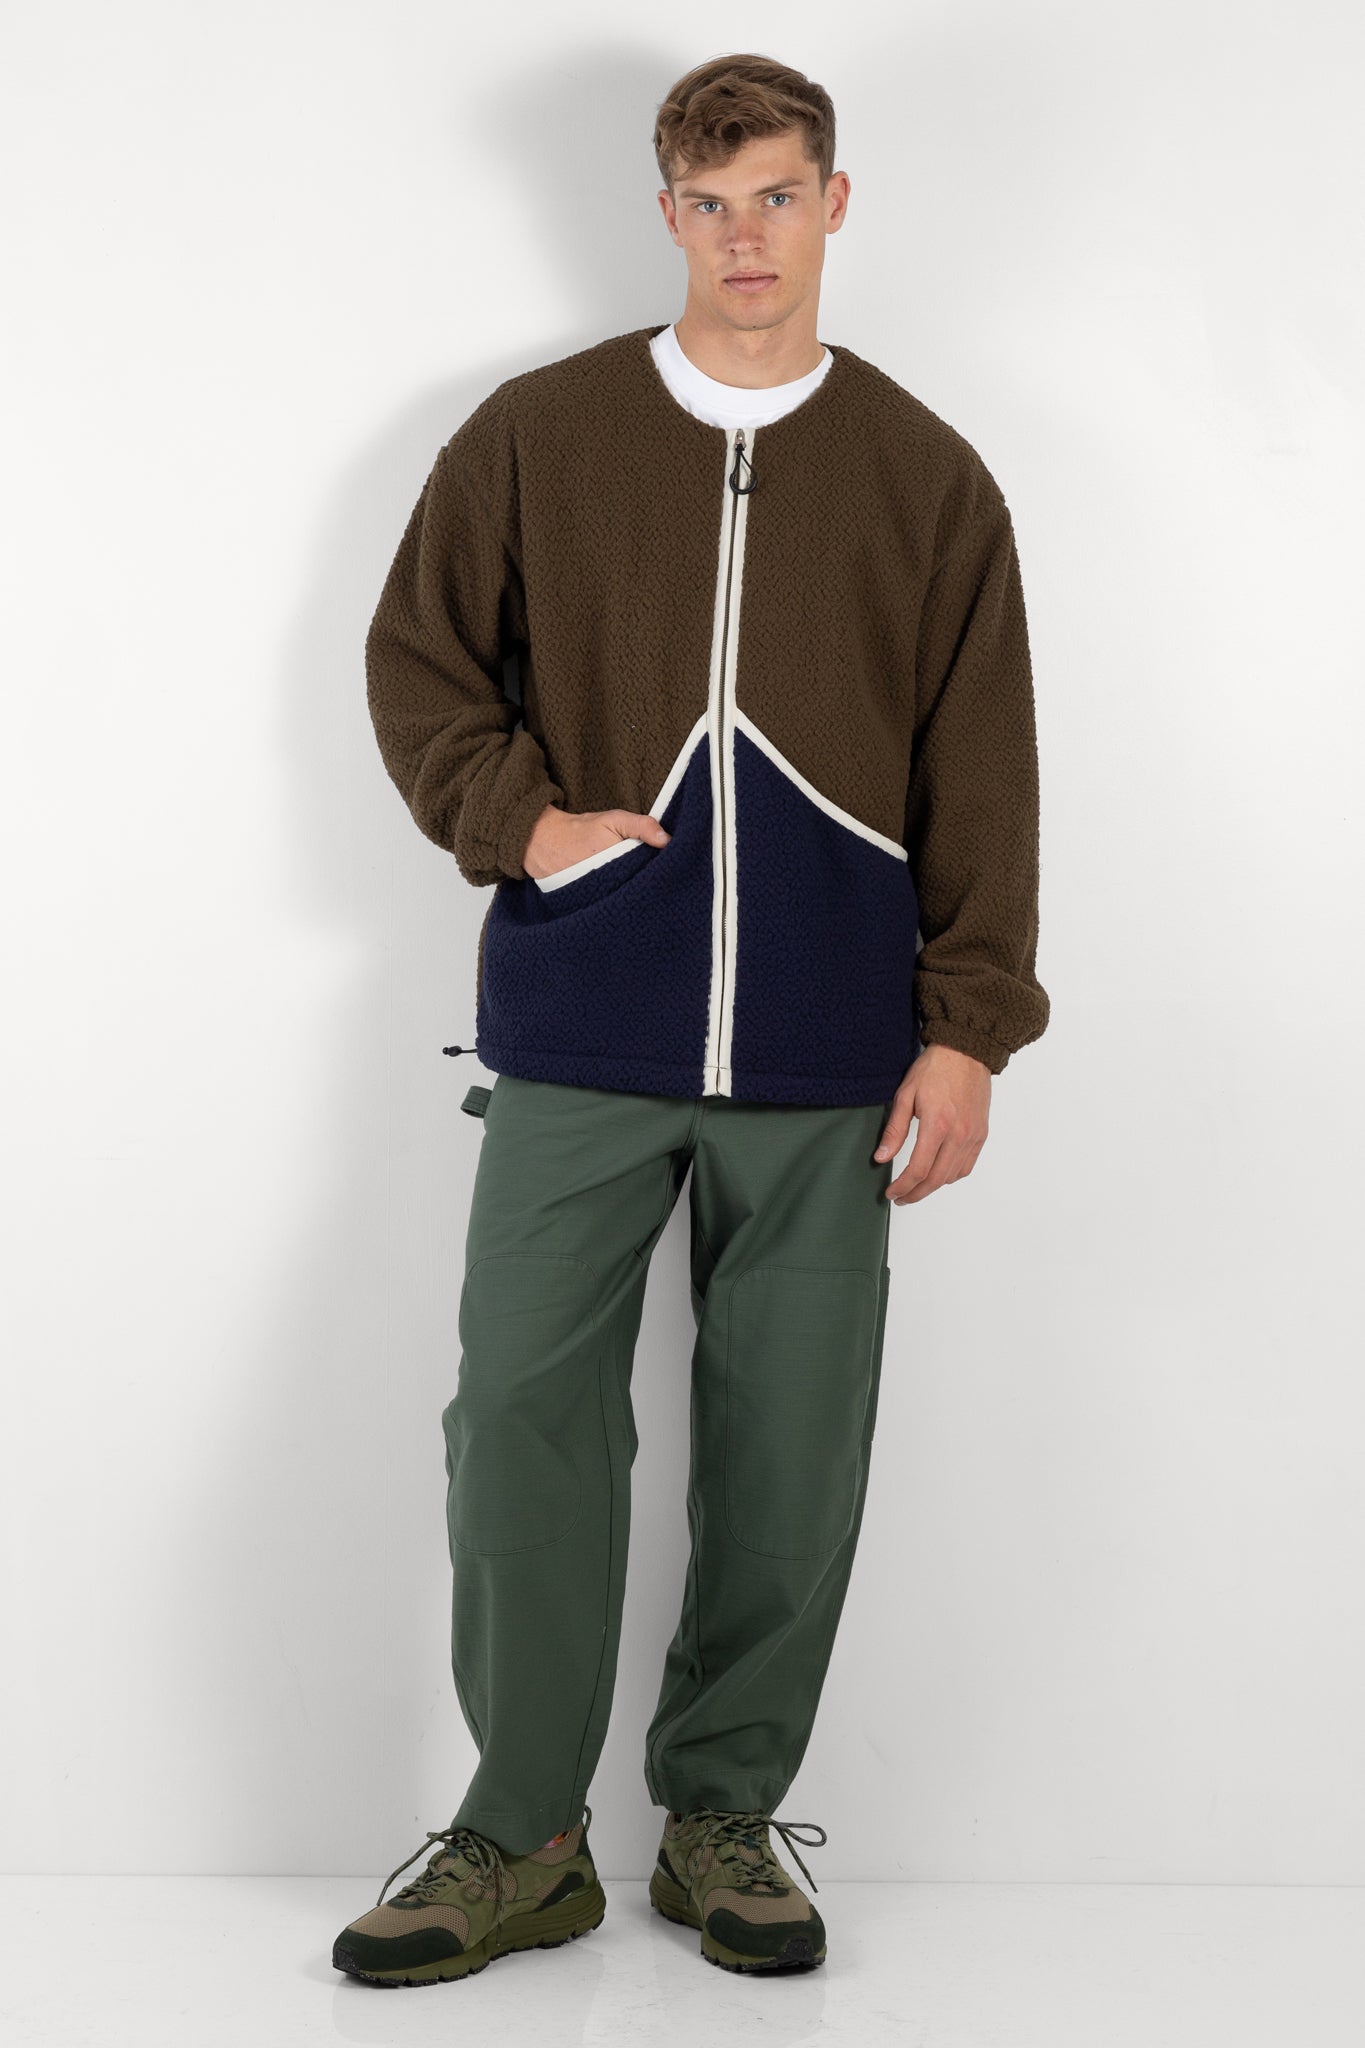 Mens jacket | Garbstore contrast jacket | The Standard Store